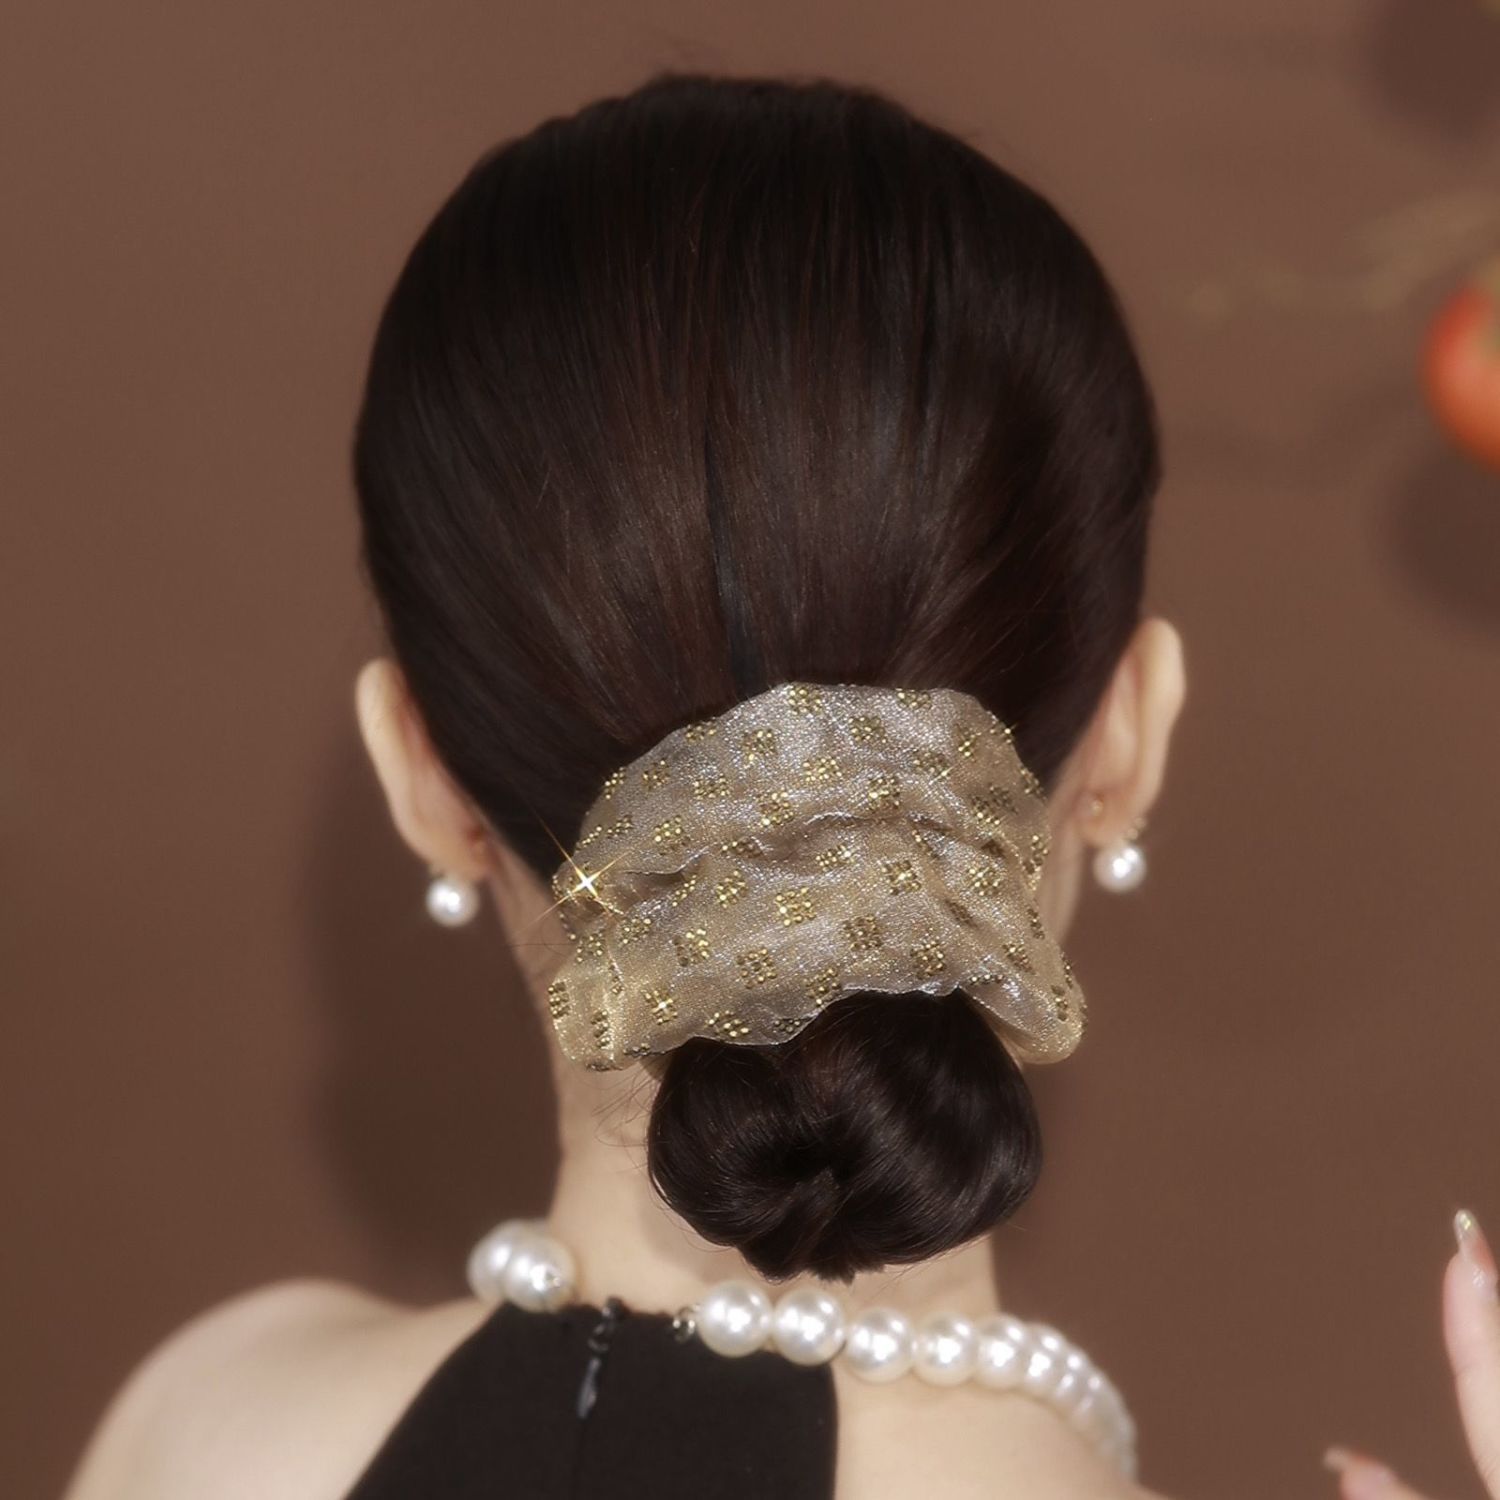 Persia Champagne Plaid Classic Fashion Design Double-layer Organza Hair Tie